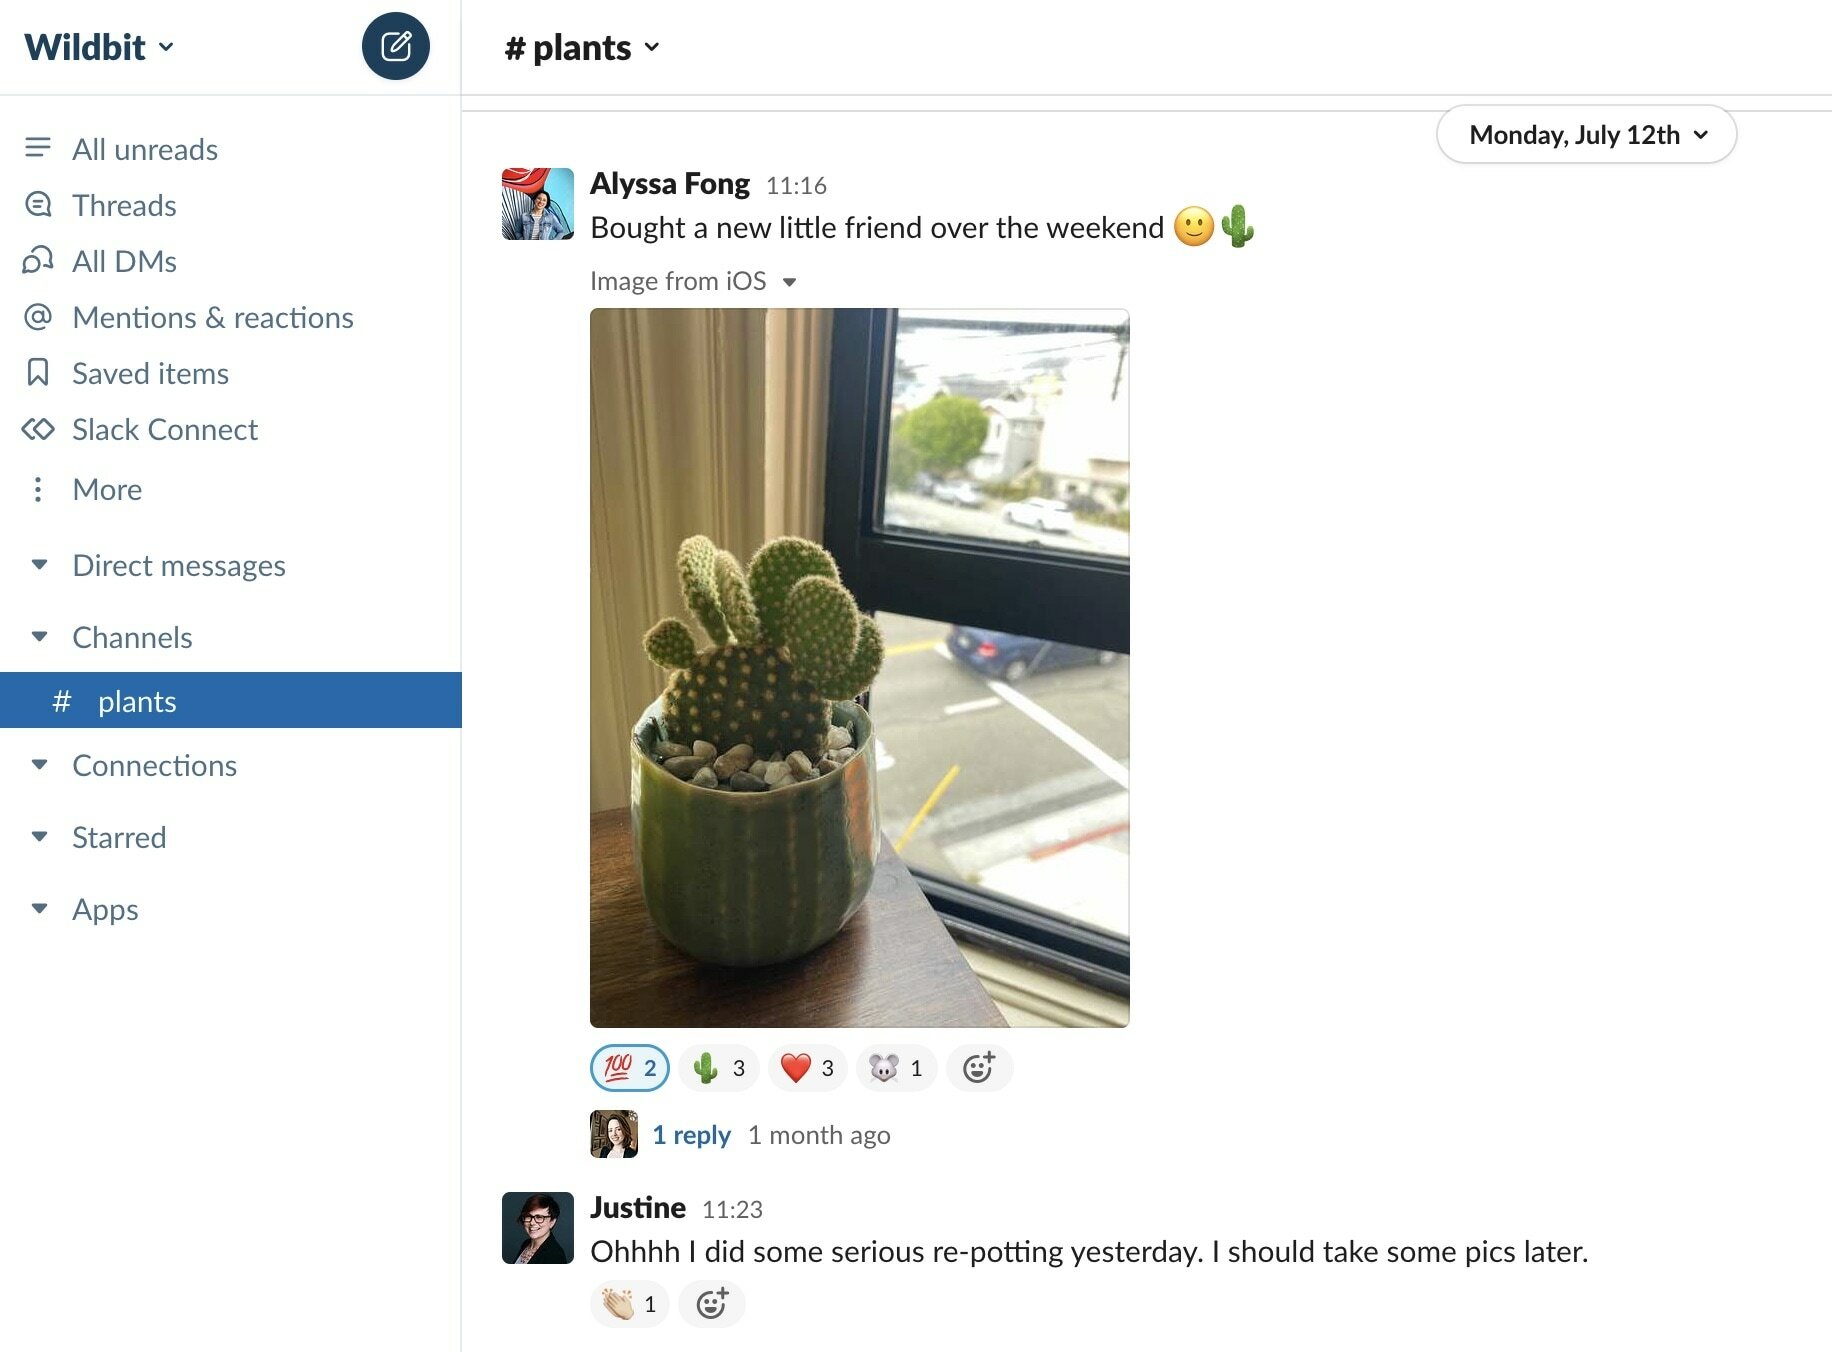 An example of the bonding activities in Wildbit's #plants channel in Slack.